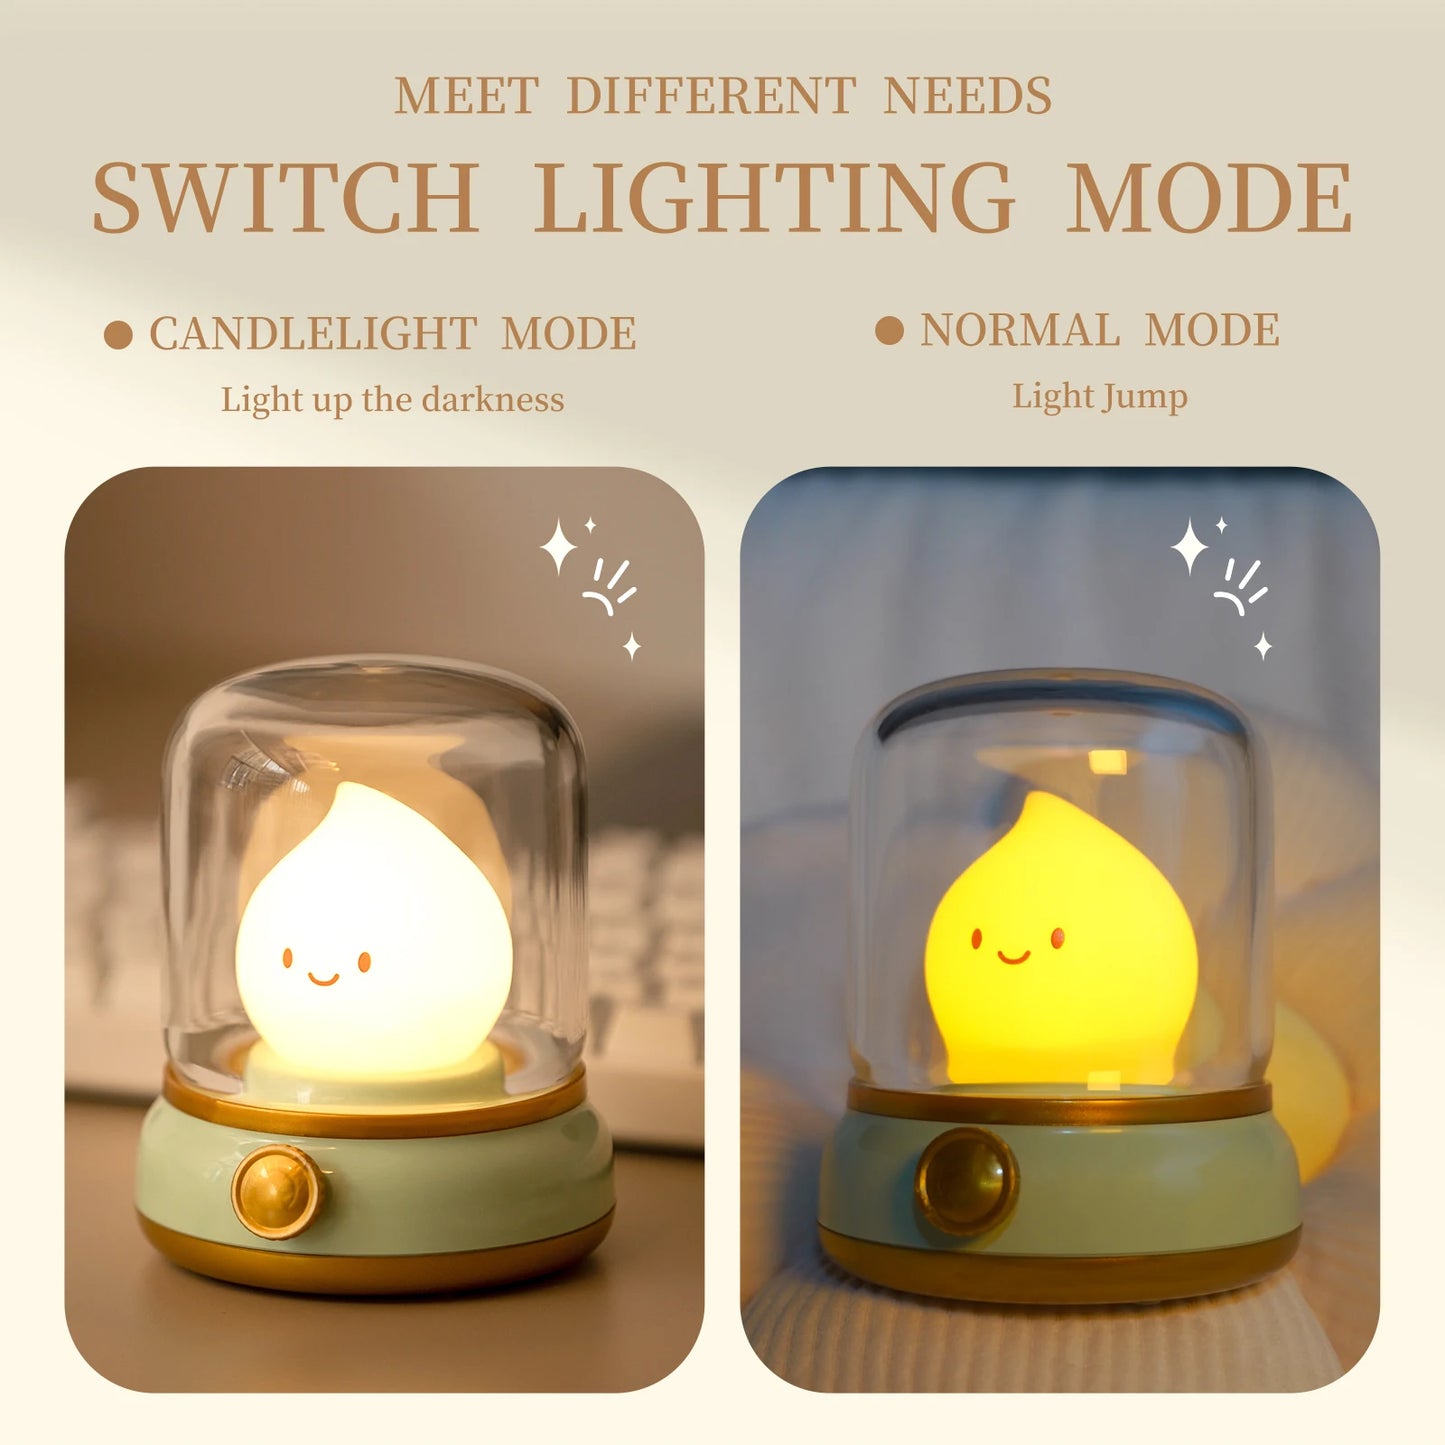 Cuddly Glow Mini Lamp